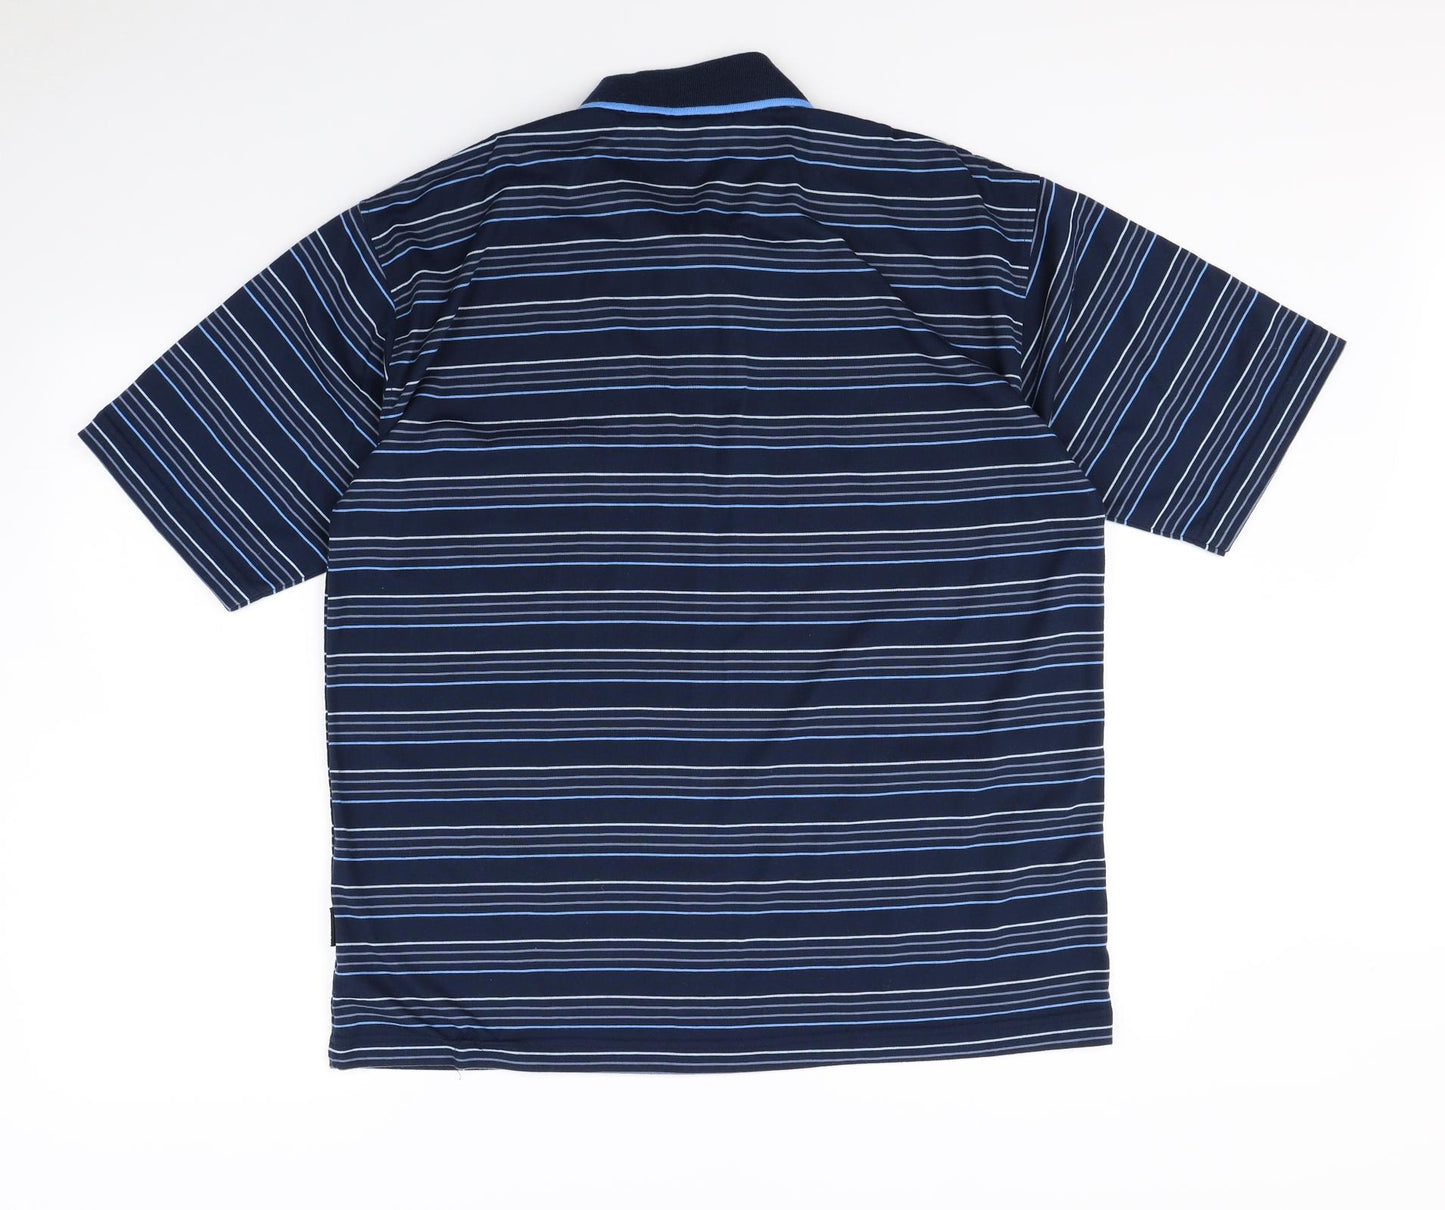 Fusion Mens Blue Striped   Polo Size 2XL